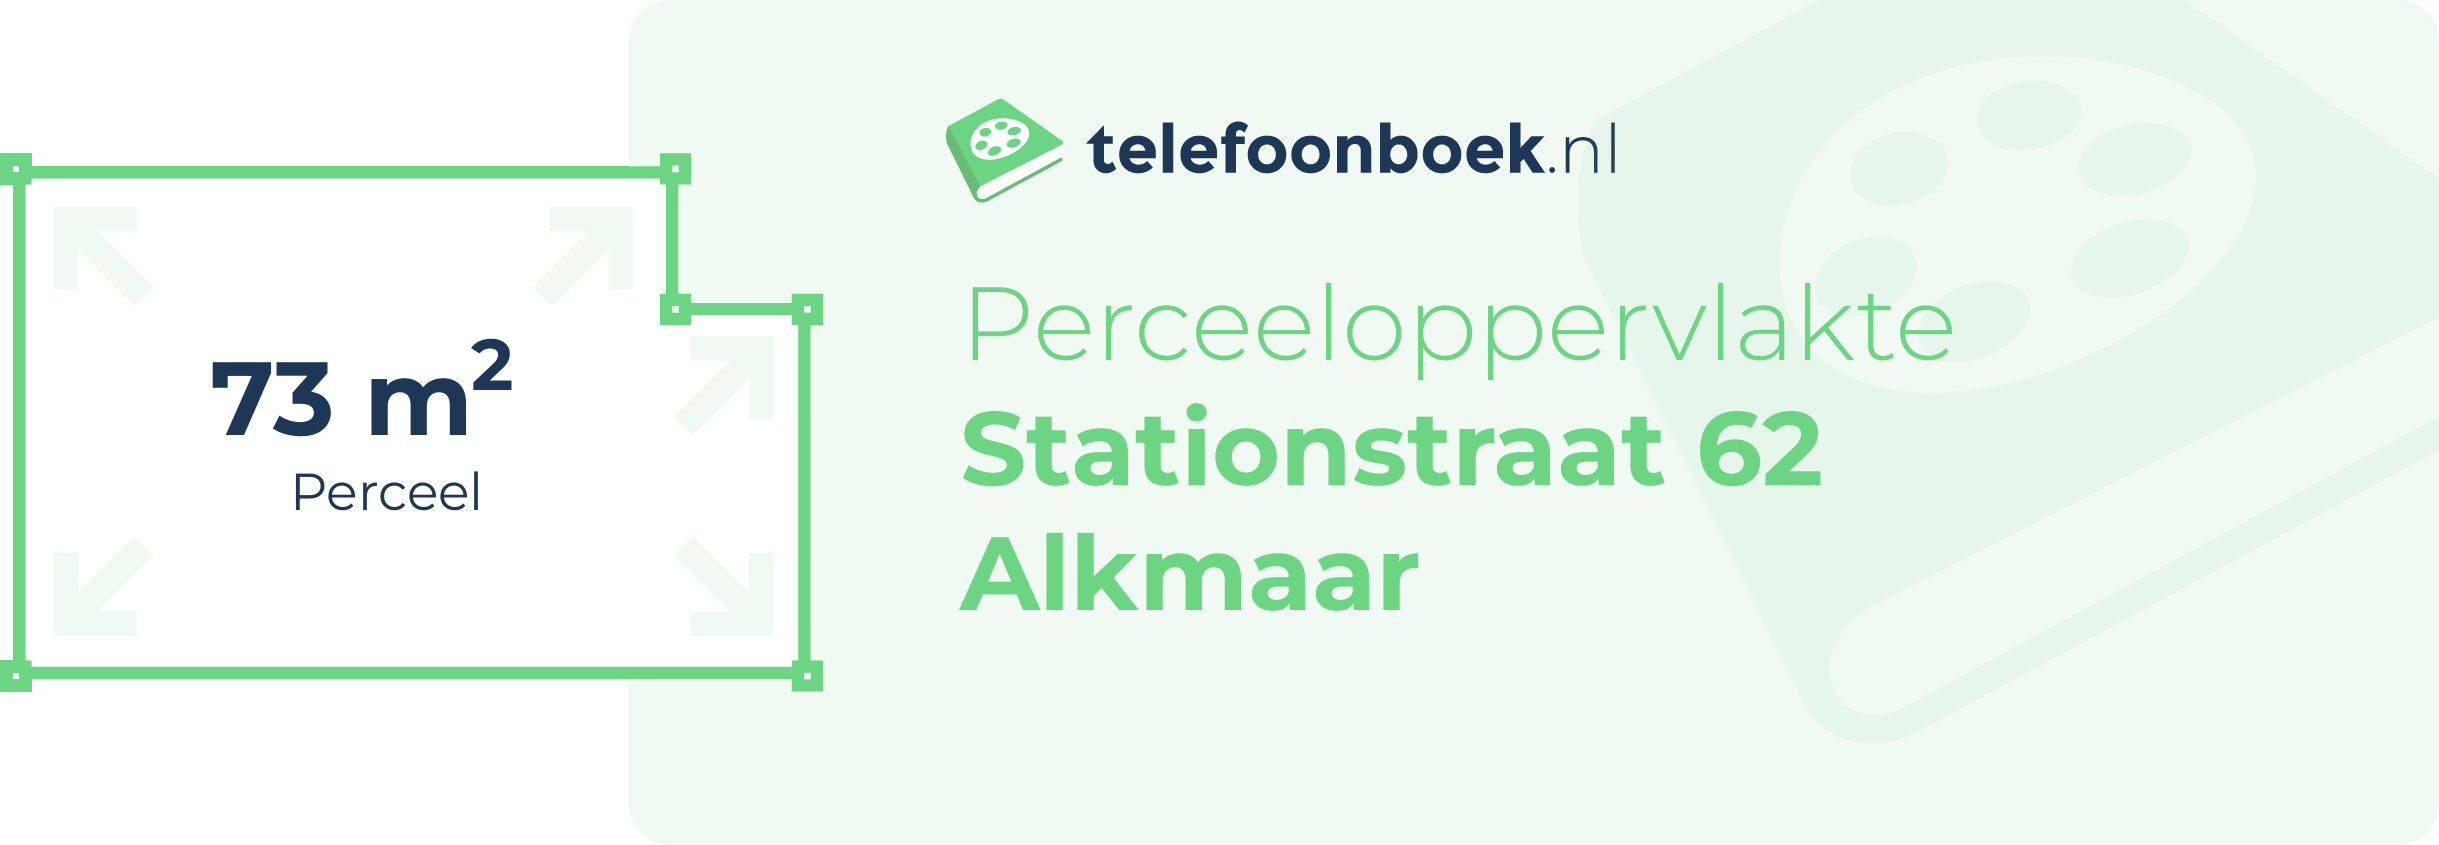 Perceeloppervlakte Stationstraat 62 Alkmaar